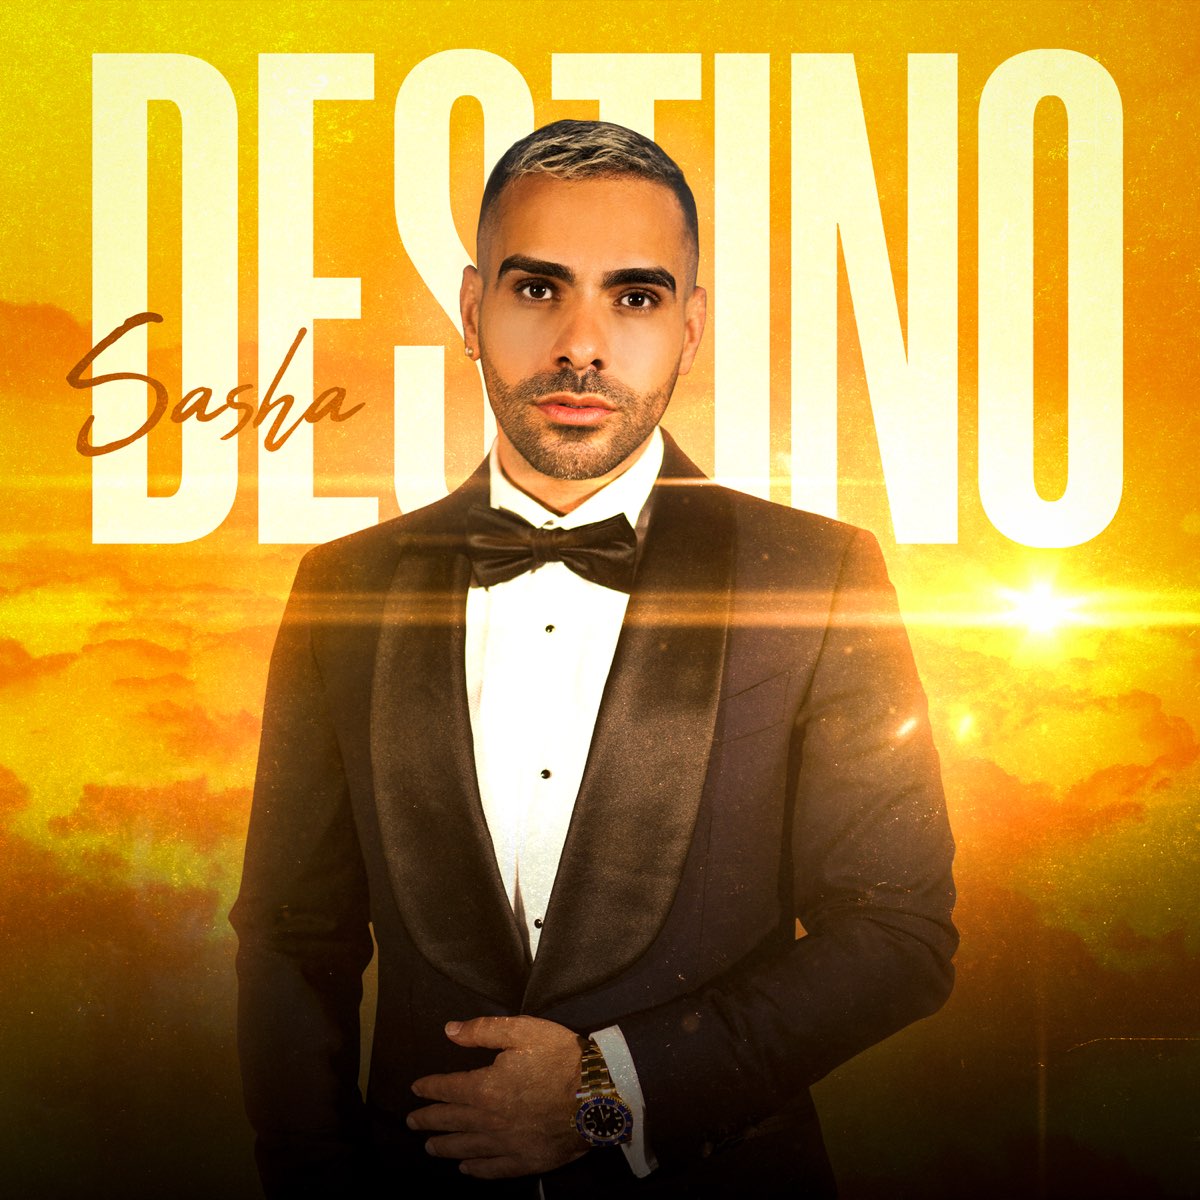 Destino - Single by Sasha on Apple Music